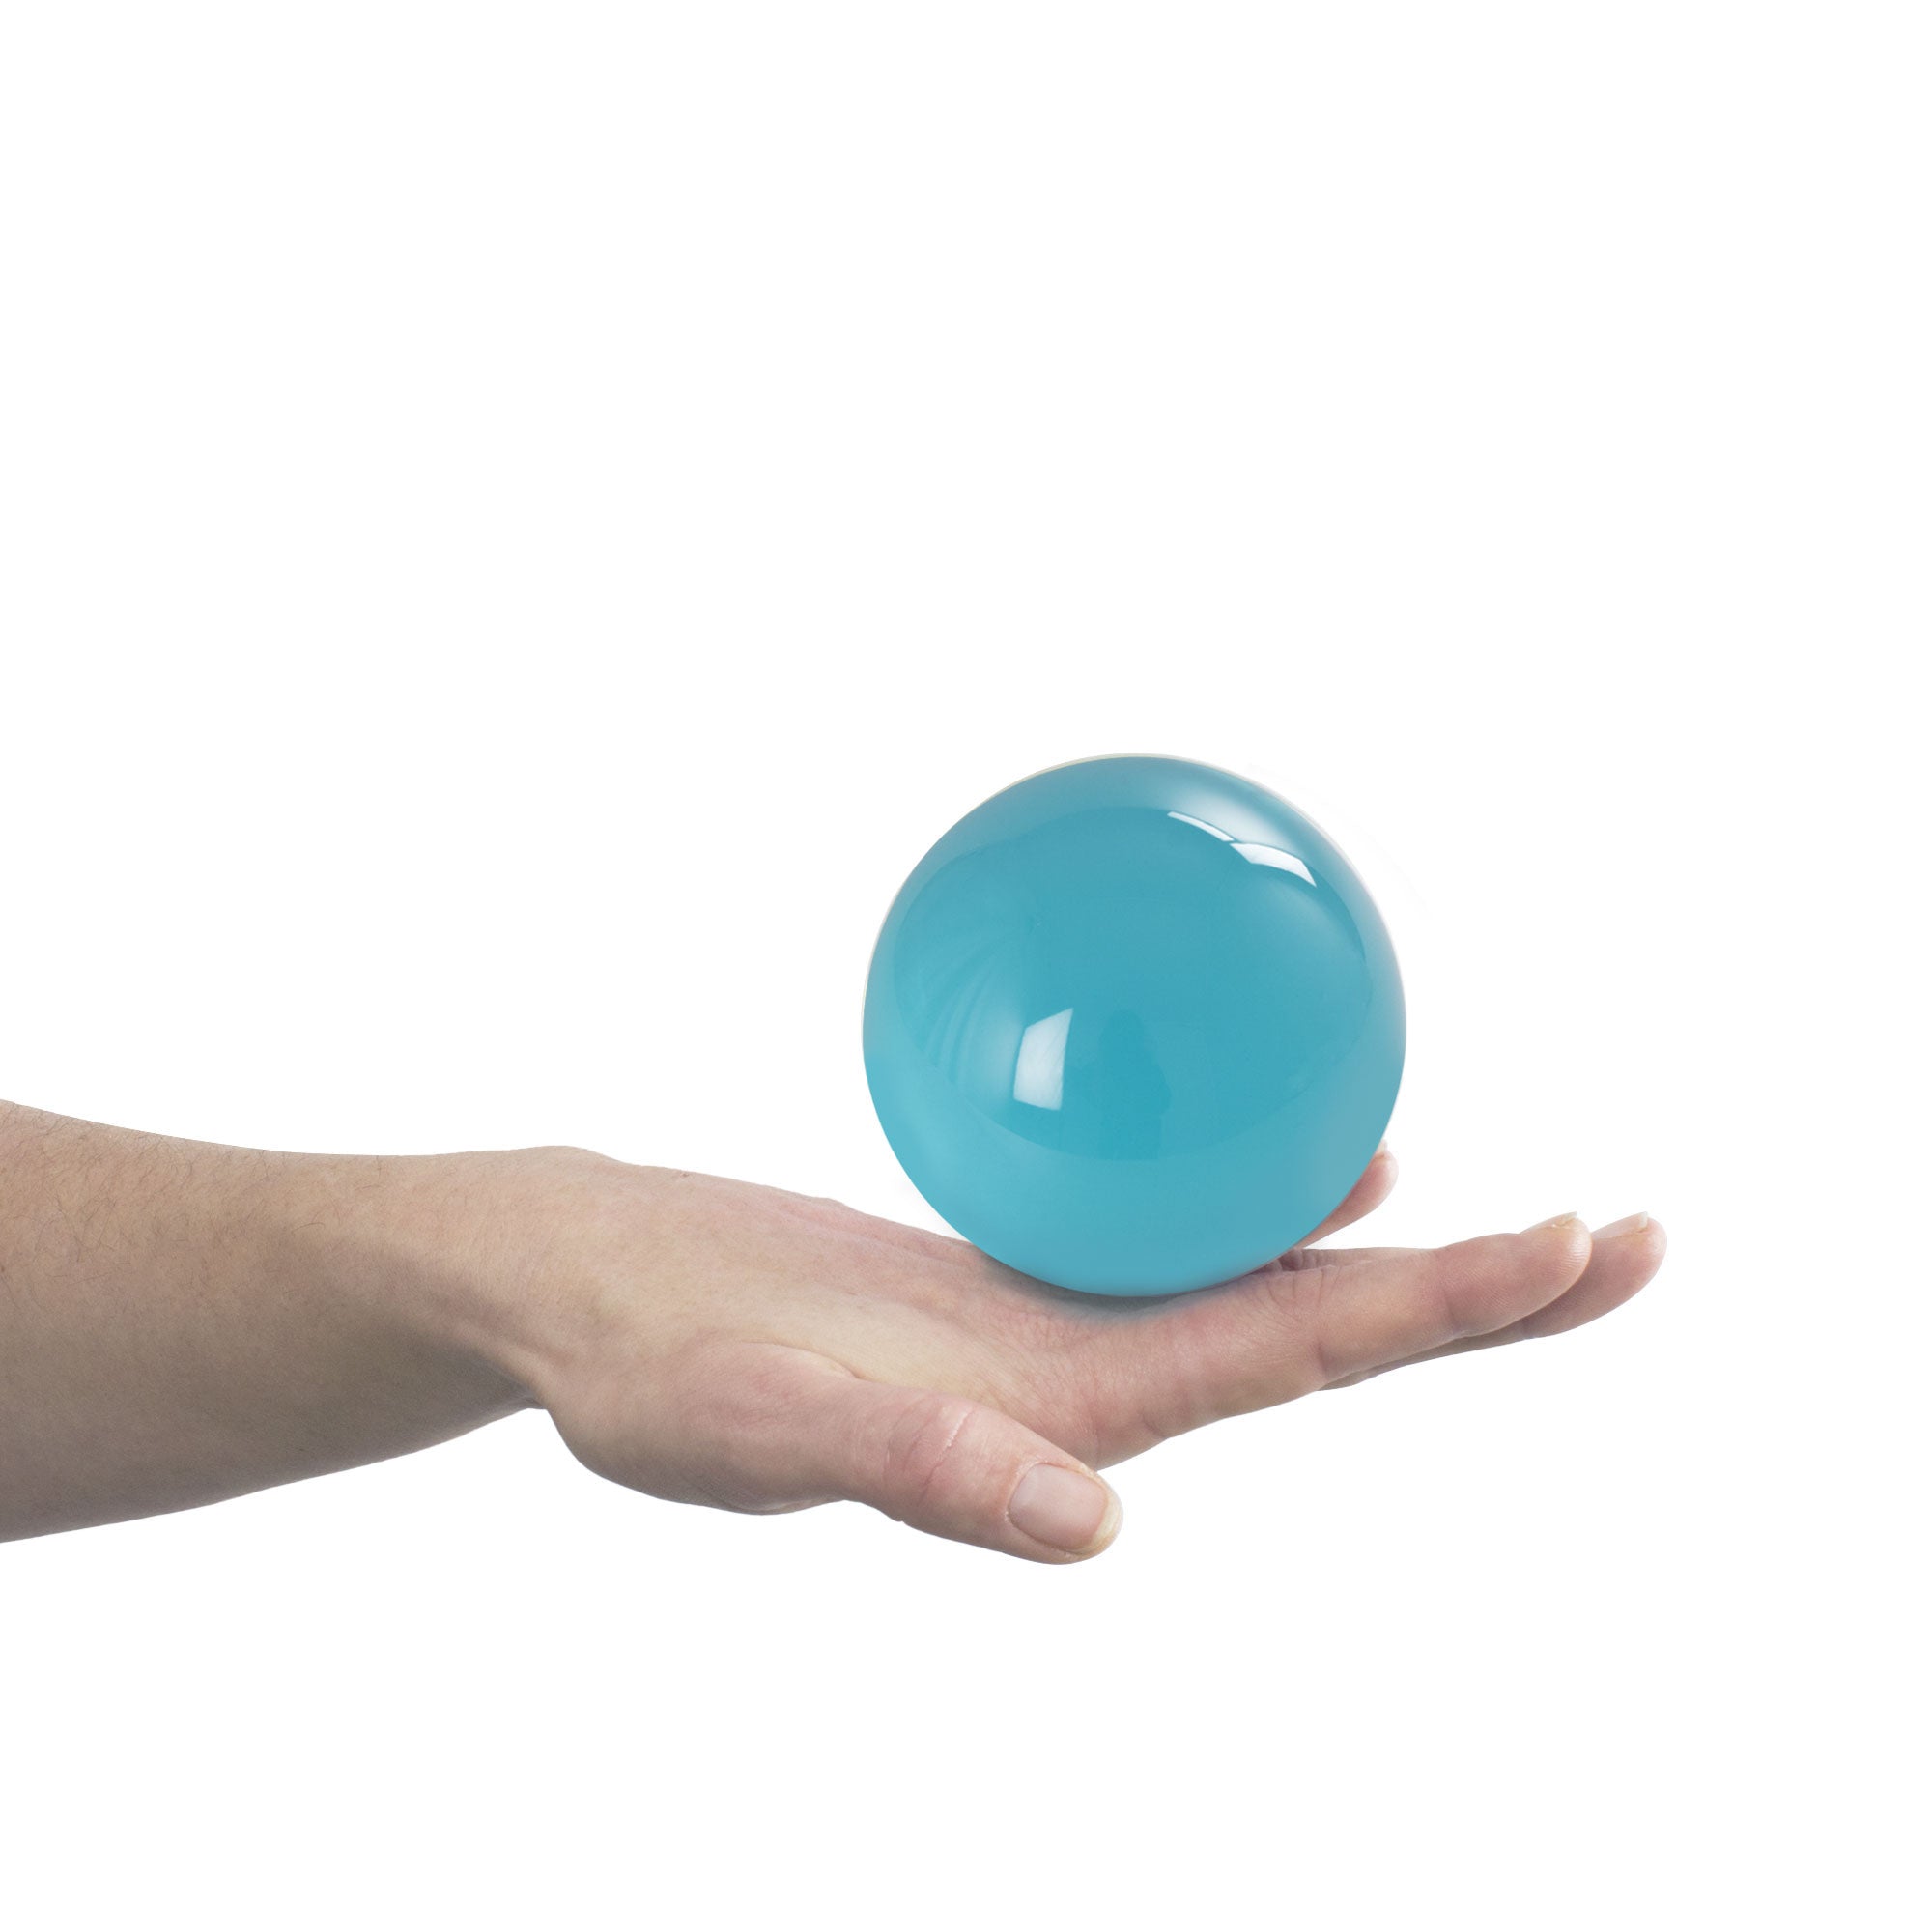 90mm aqua contact ball balanced on hand